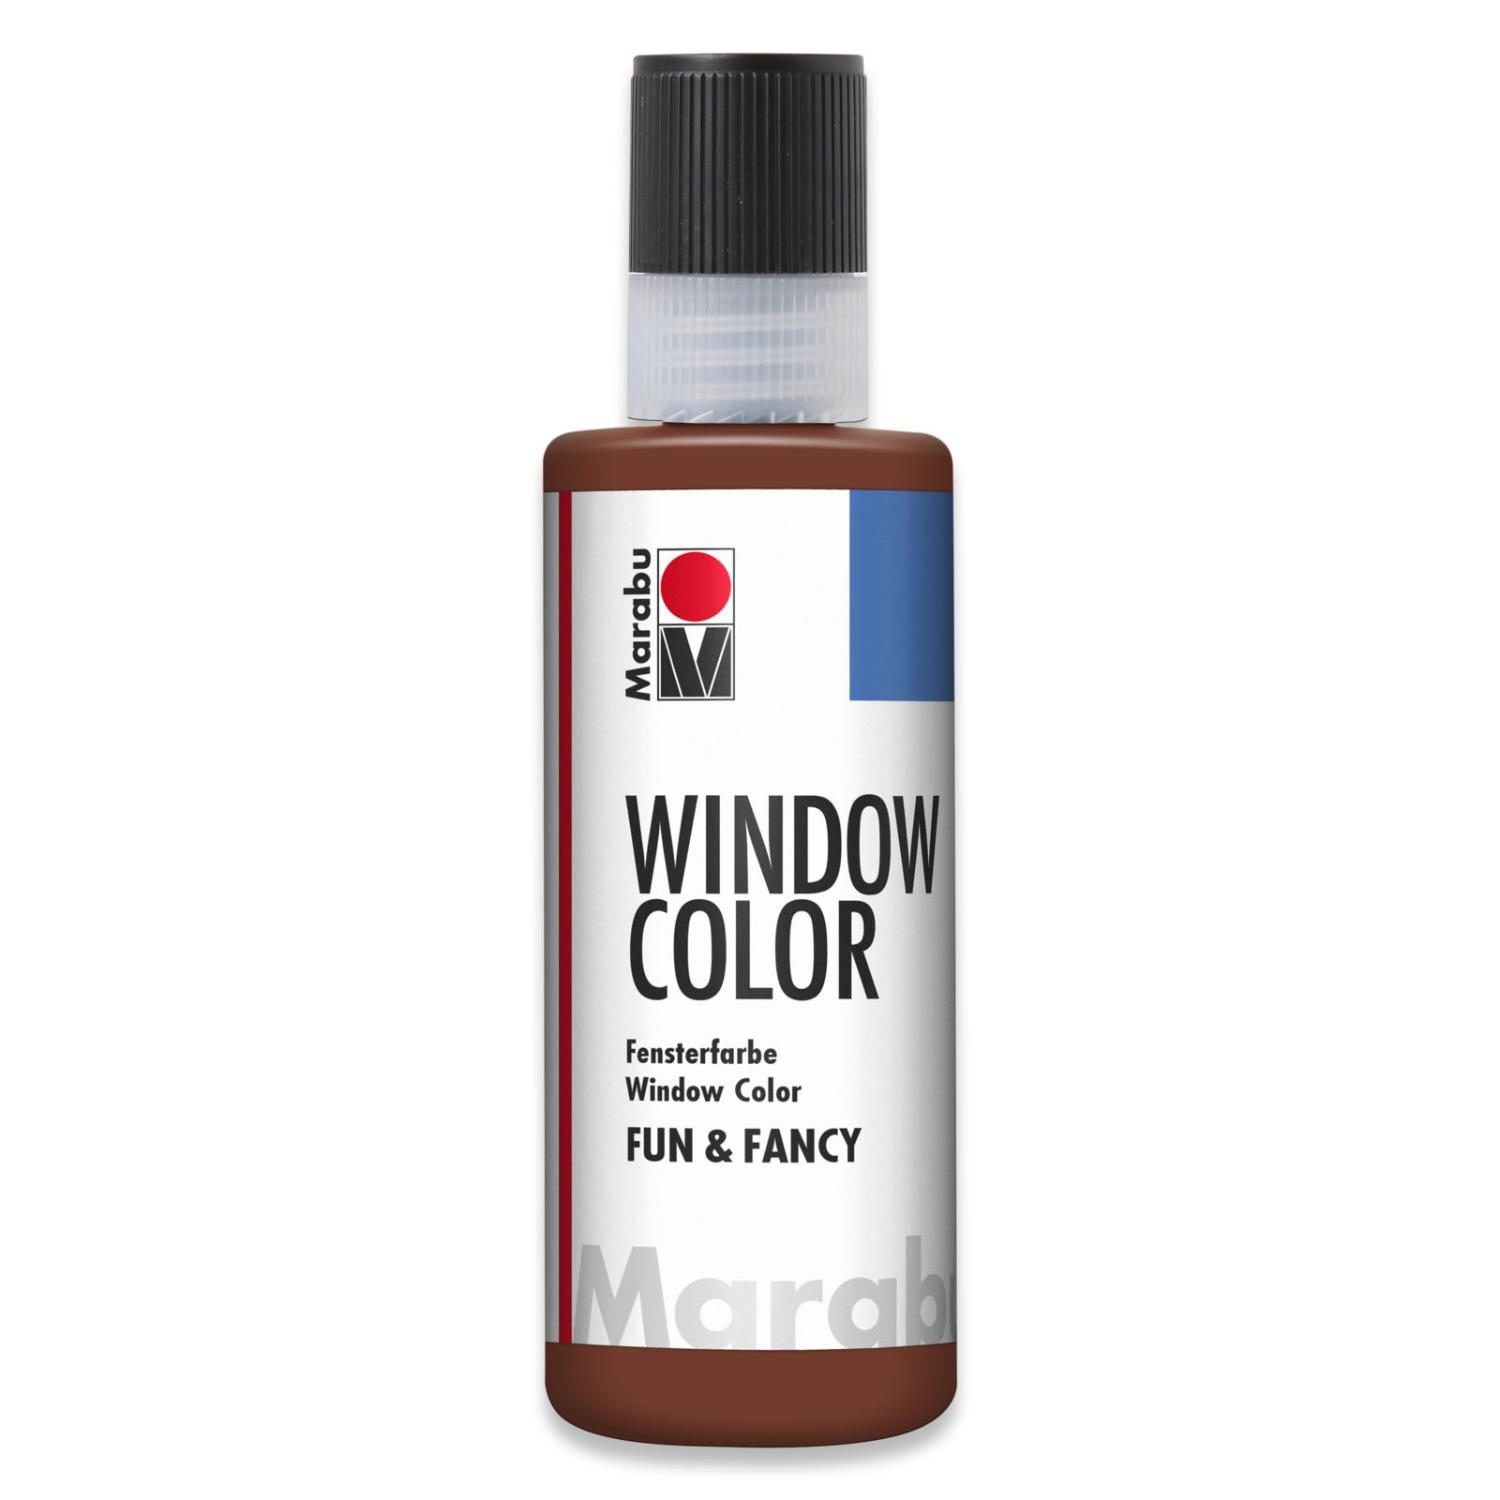 Marabu Window Color fun & fancy, 80 ml, mittelbraun